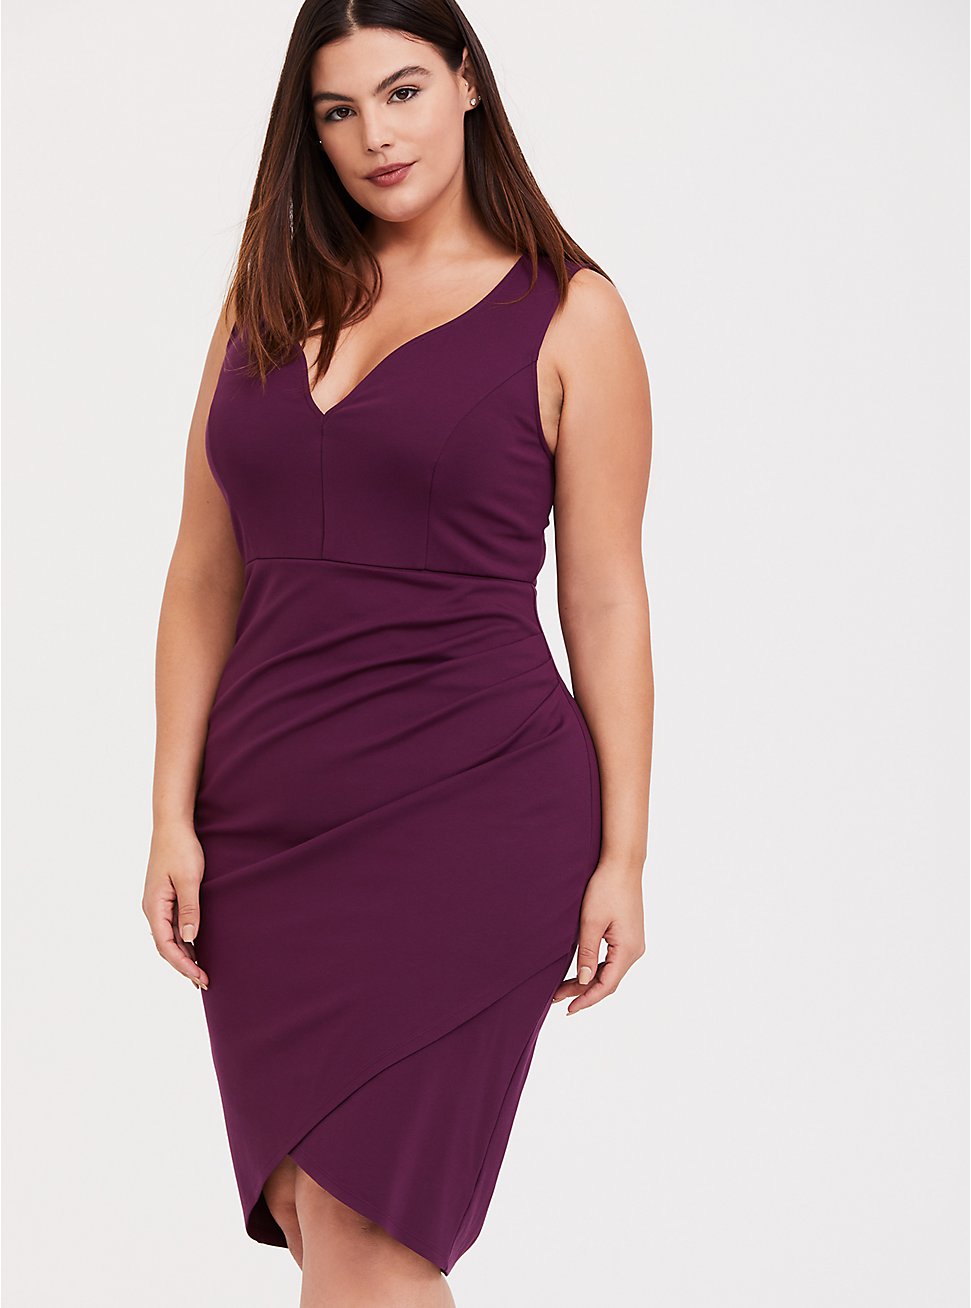 Plus Size - Burgundy Purple Premium Ponte Bodycon Dress - Torrid